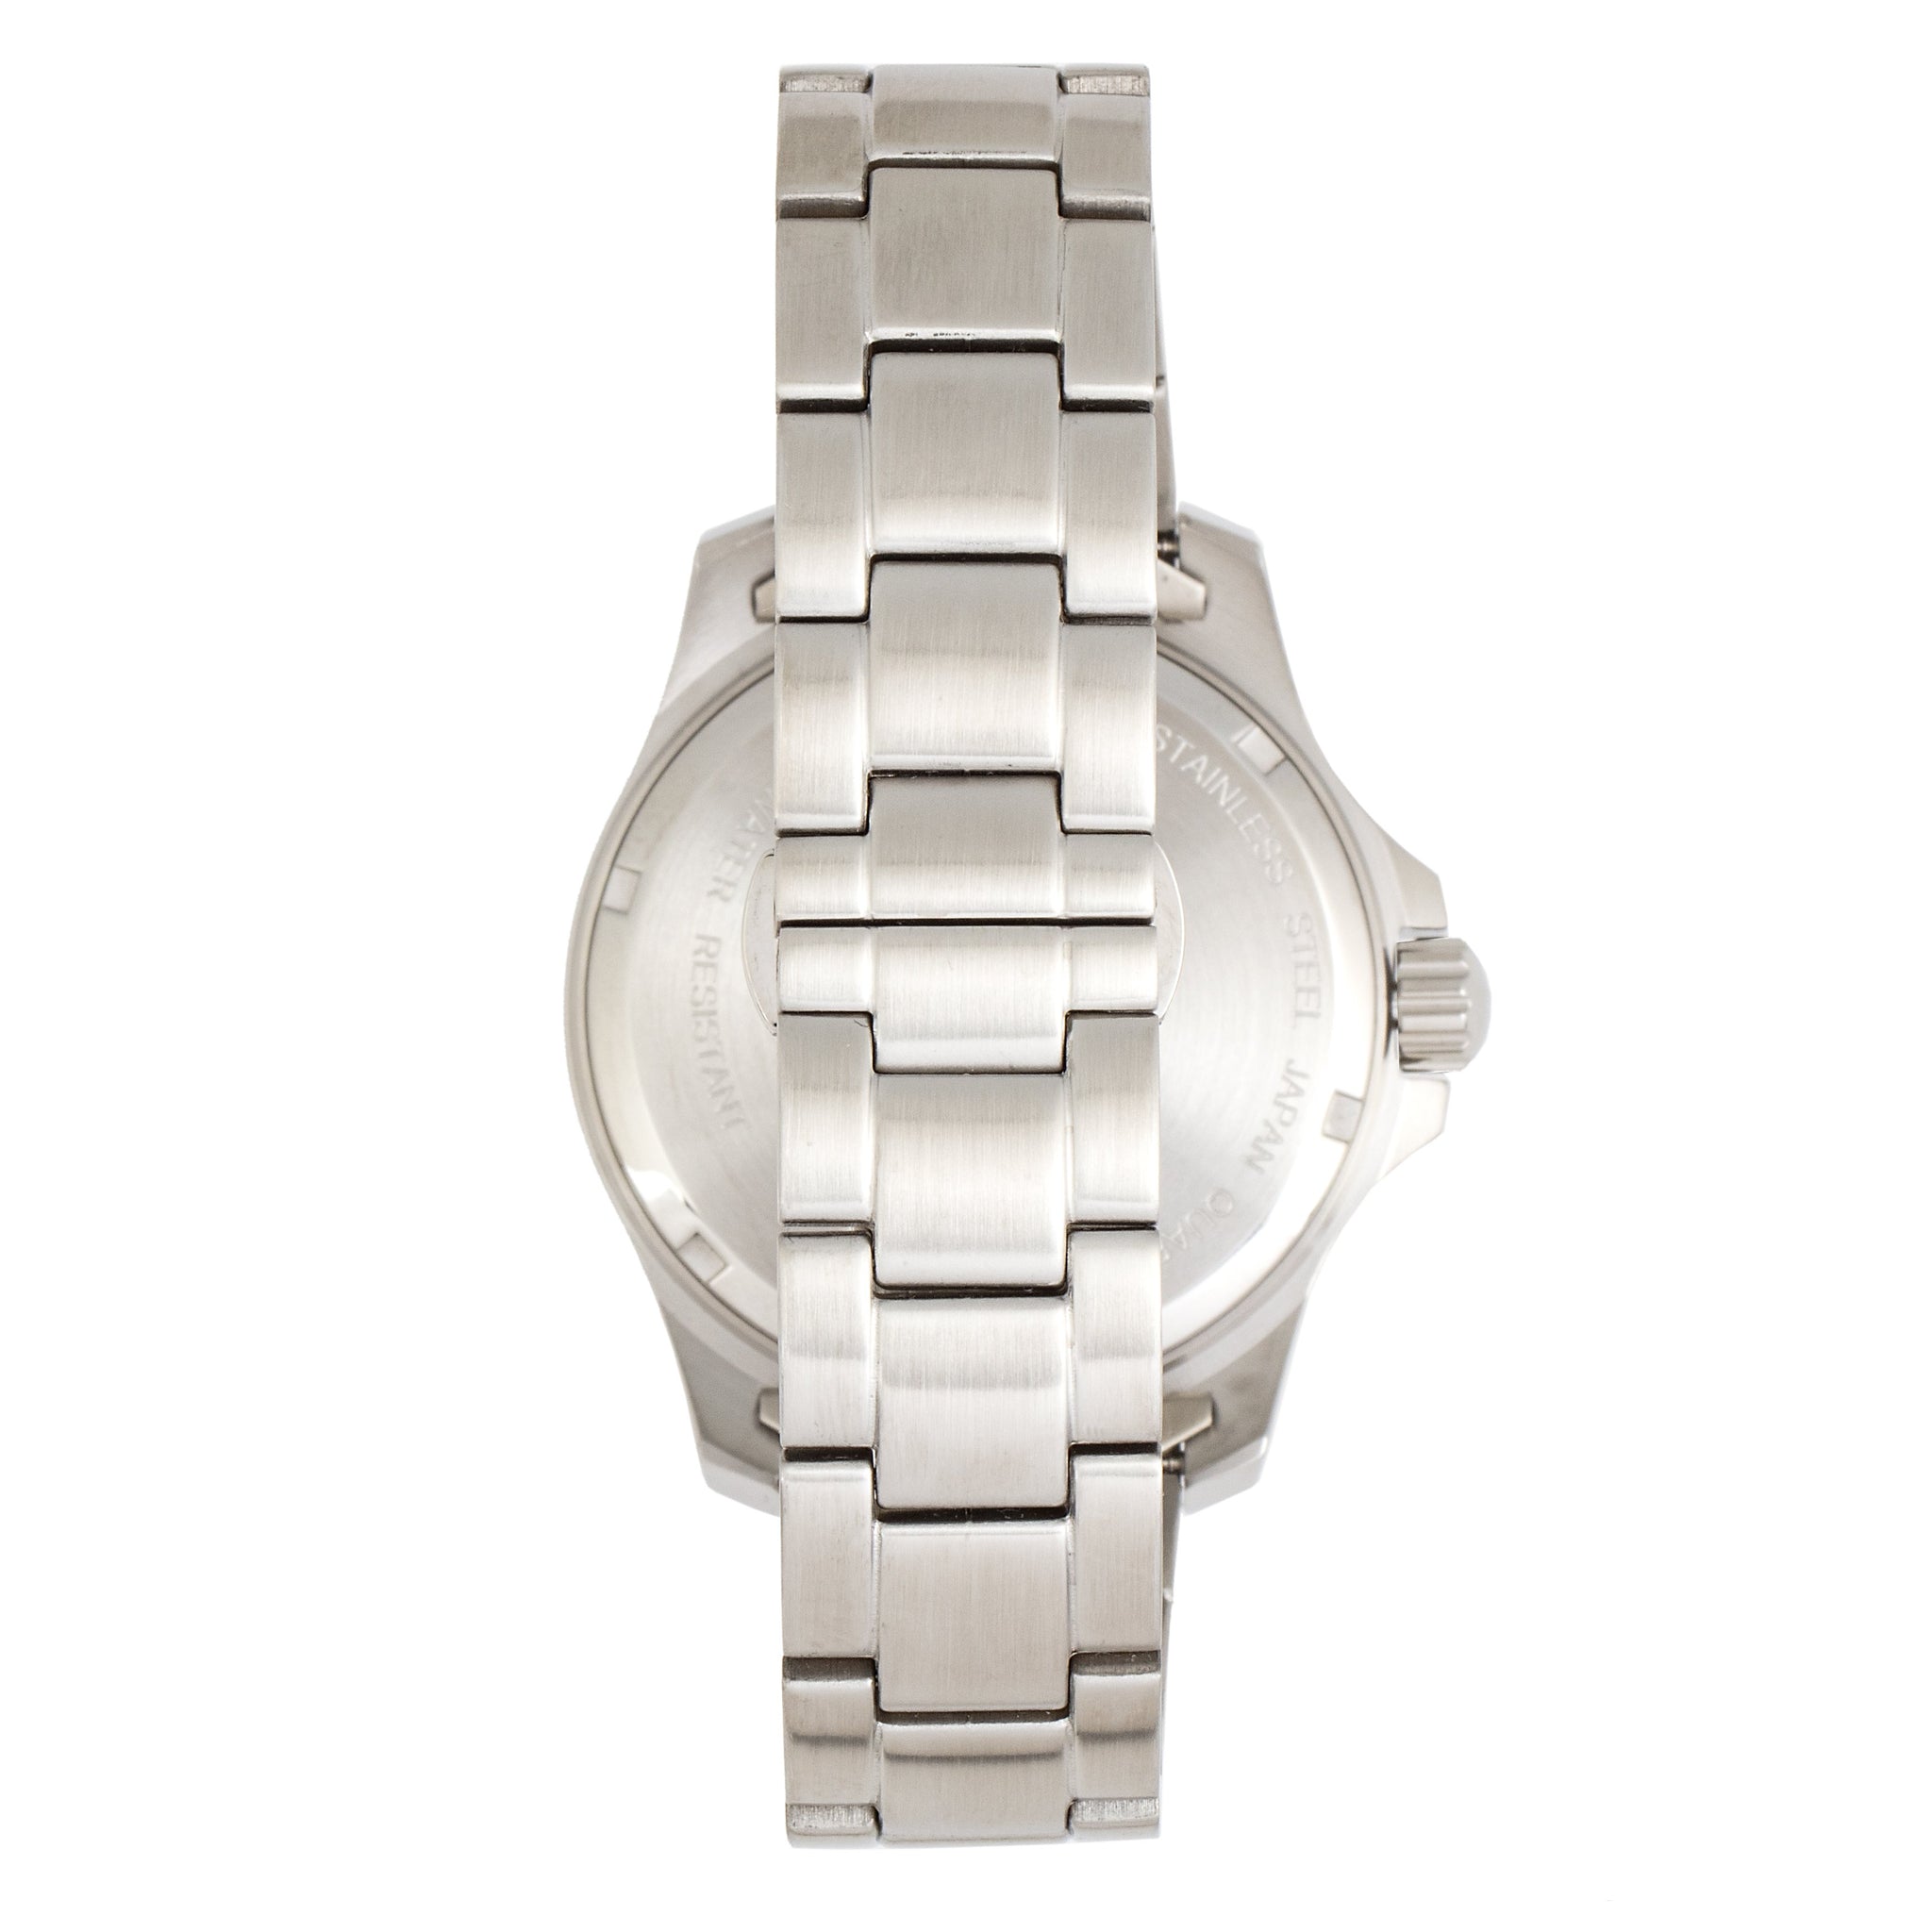 Elevon Aviator Bracelet Watch w/Date - Silver/White - ELE120-1